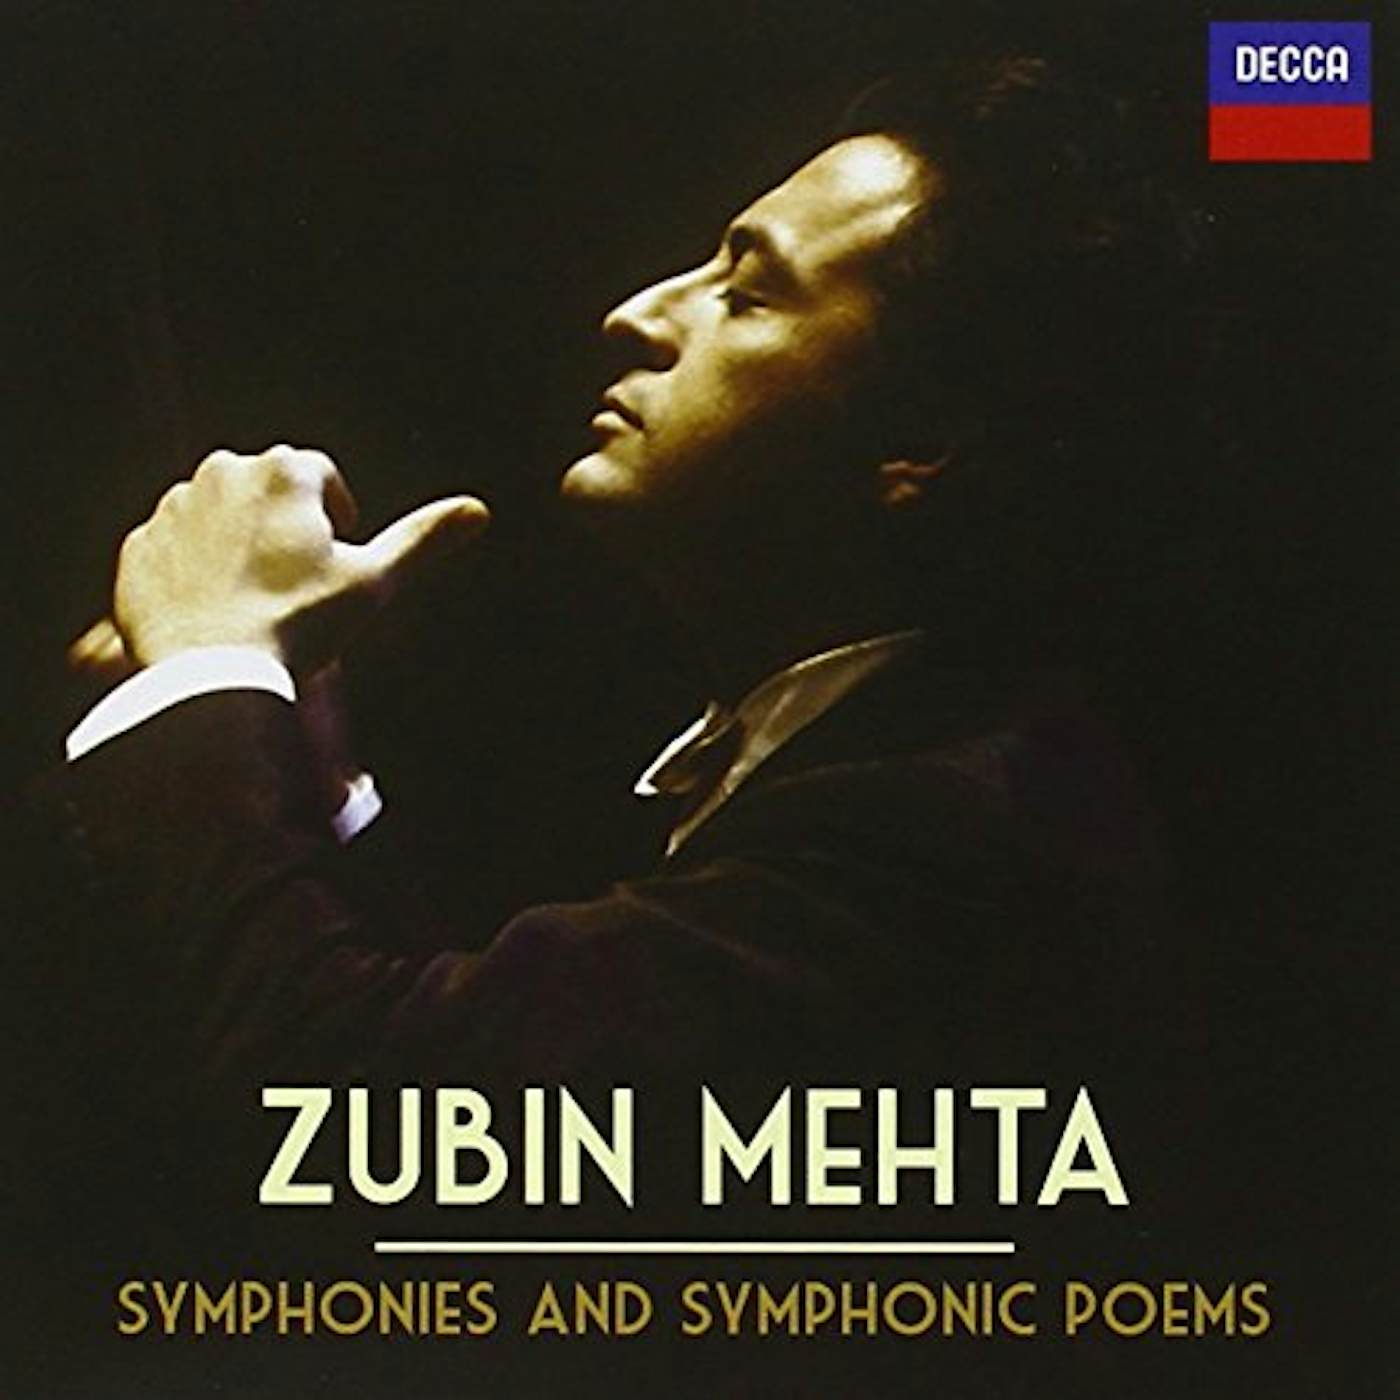 Zubin Mehta SYMPHONIES & SYMPHONIC POEMS CD